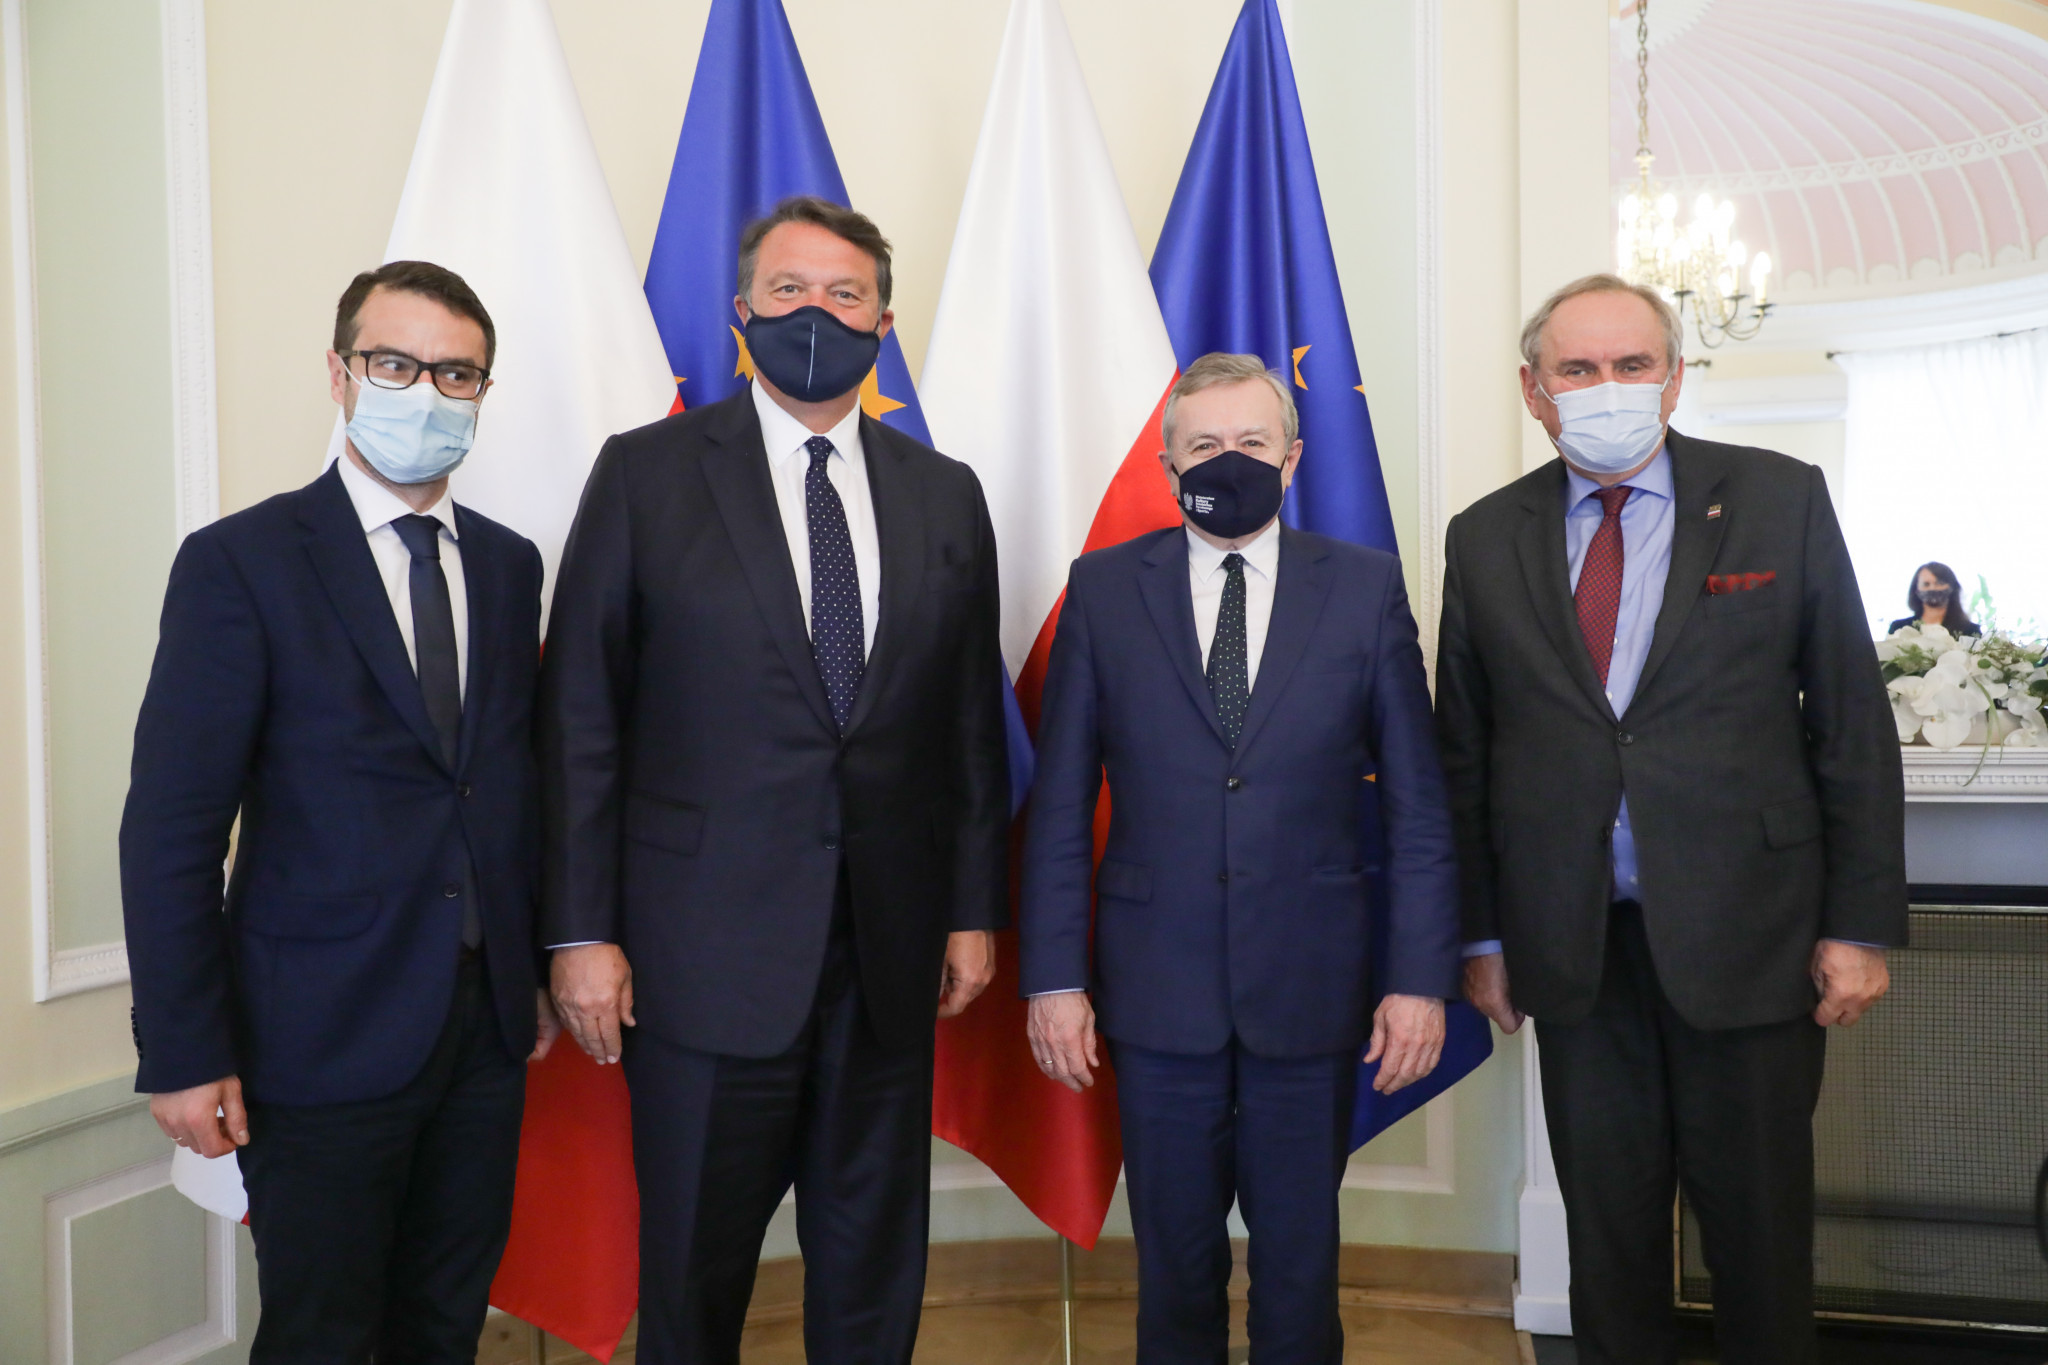 Poland’s Deputy Prime Minister Piotr Gliński, centre right, met with EOC officials  ©Government of Poland/Danuta Matloch